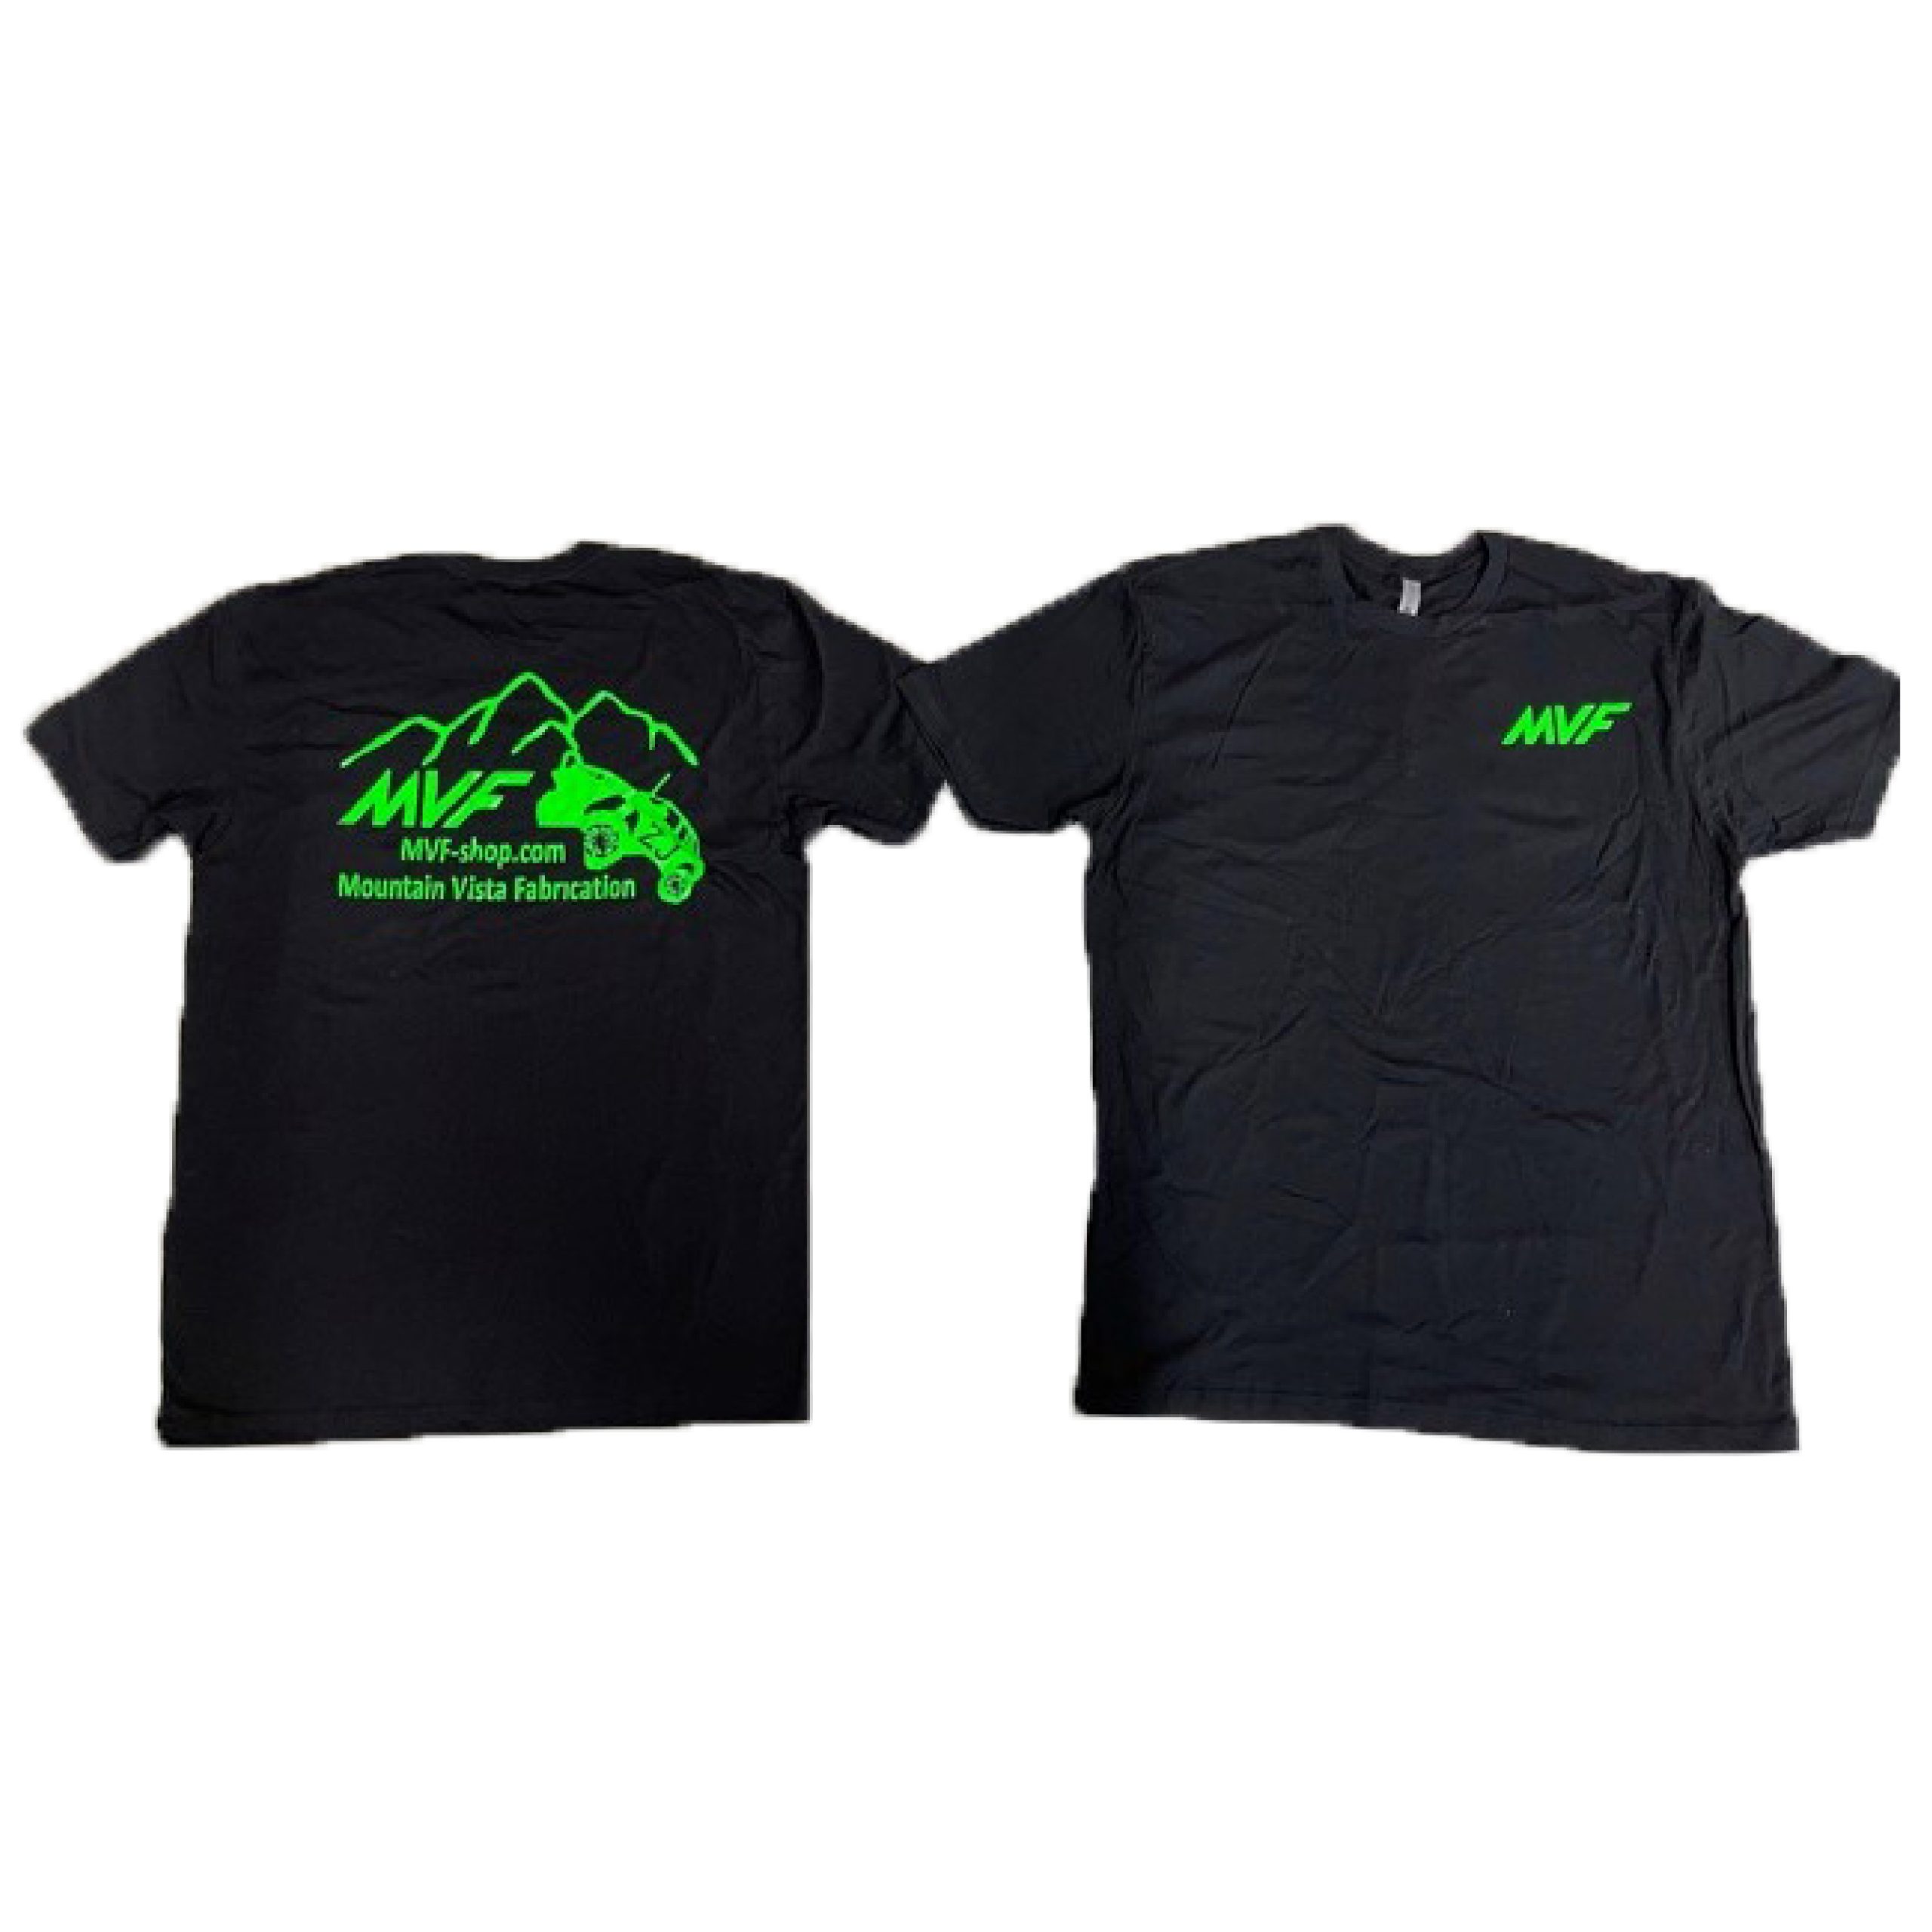 MVF Tshirts black with green ink